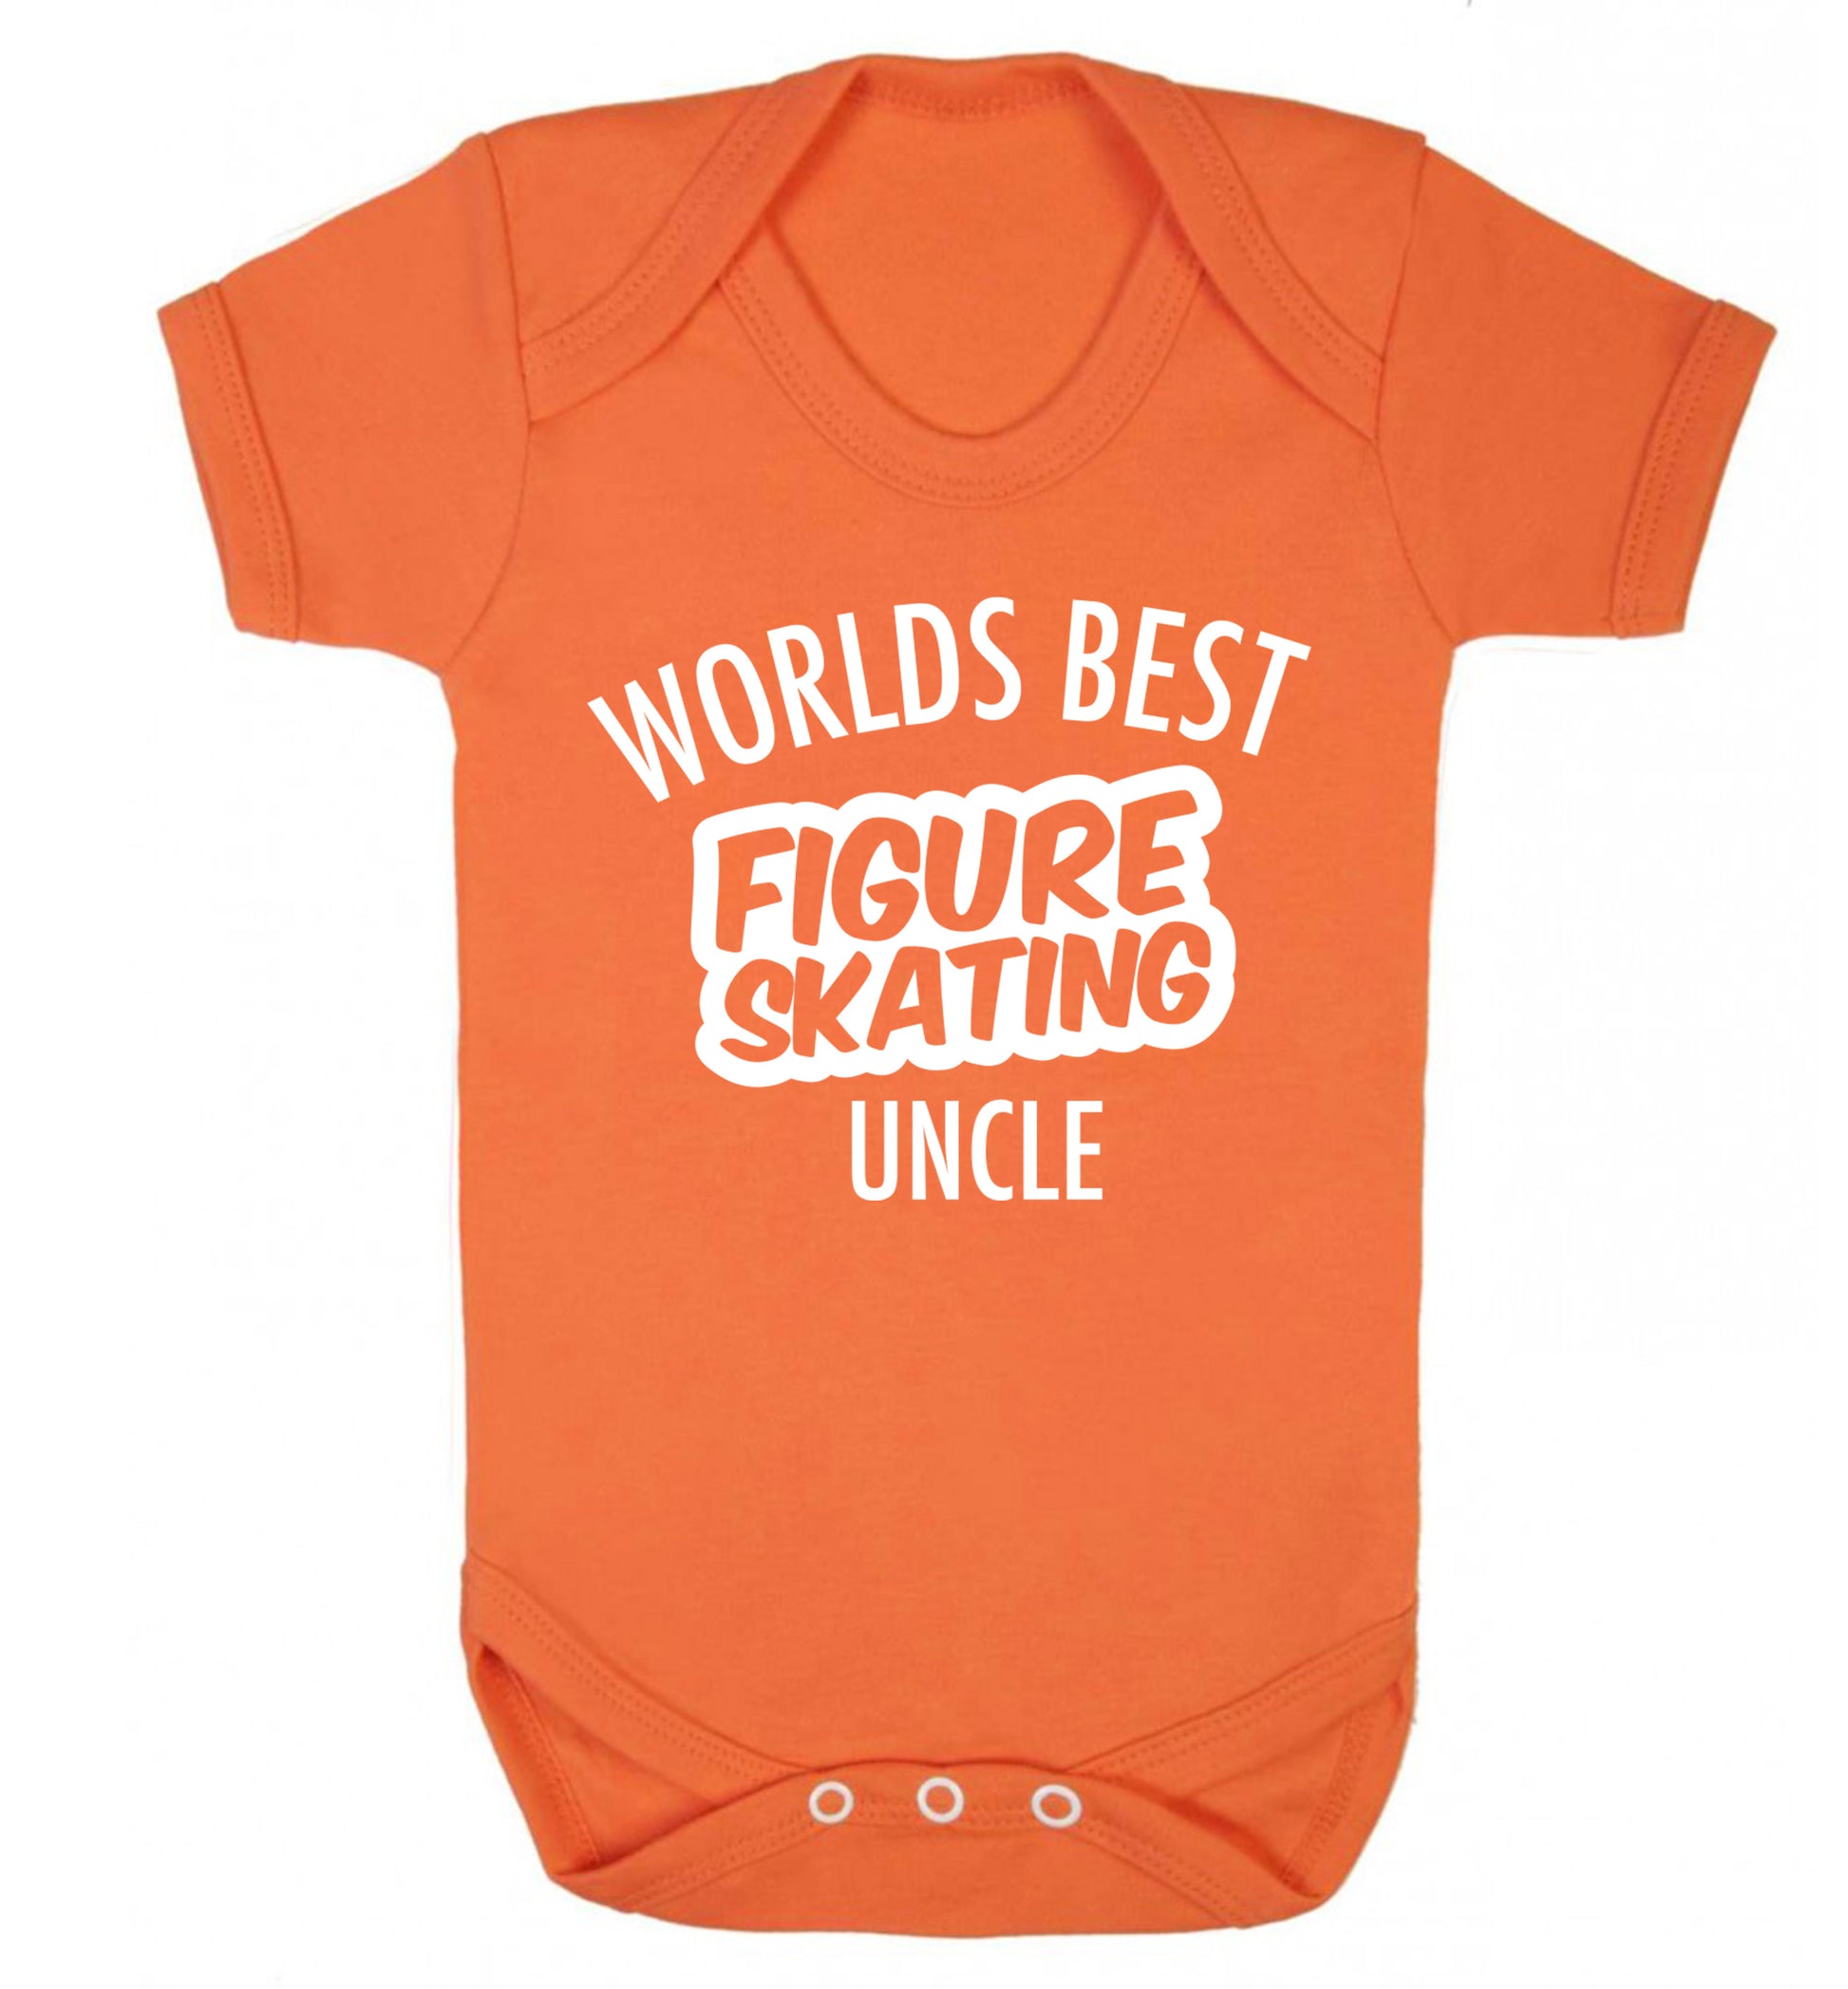 Worlds best figure skating uncle Baby Vest orange 18-24 months